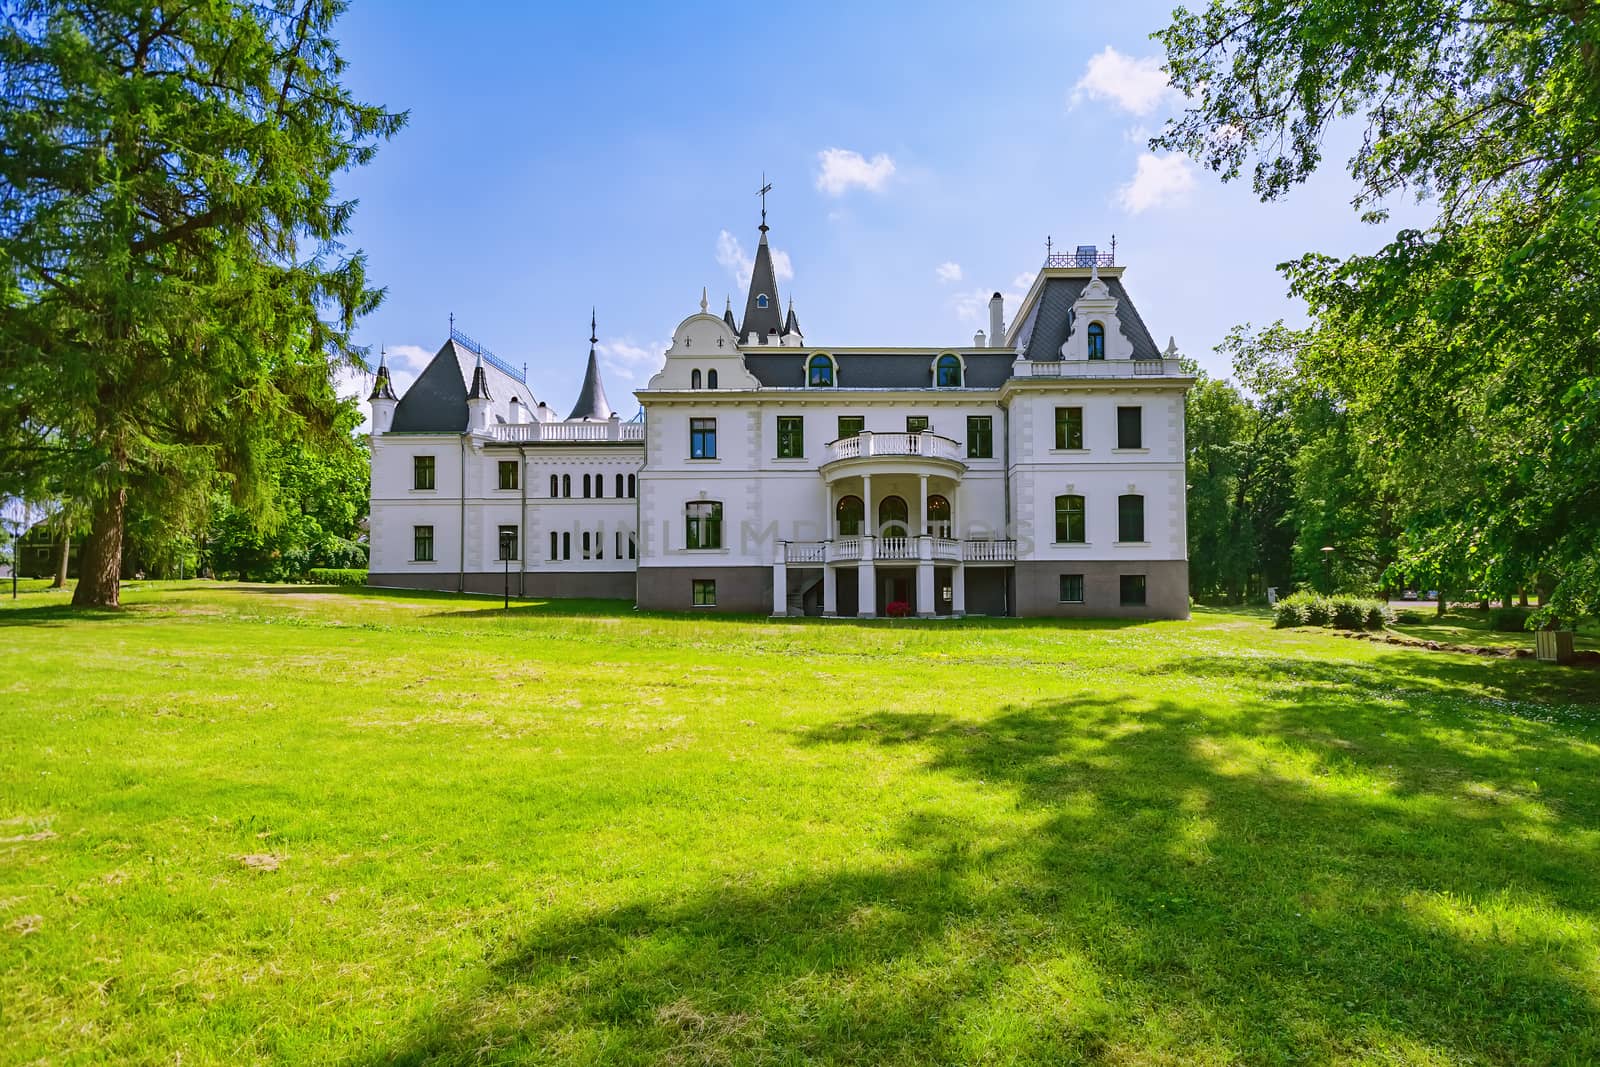 Old palace in Stameriena, Latvia